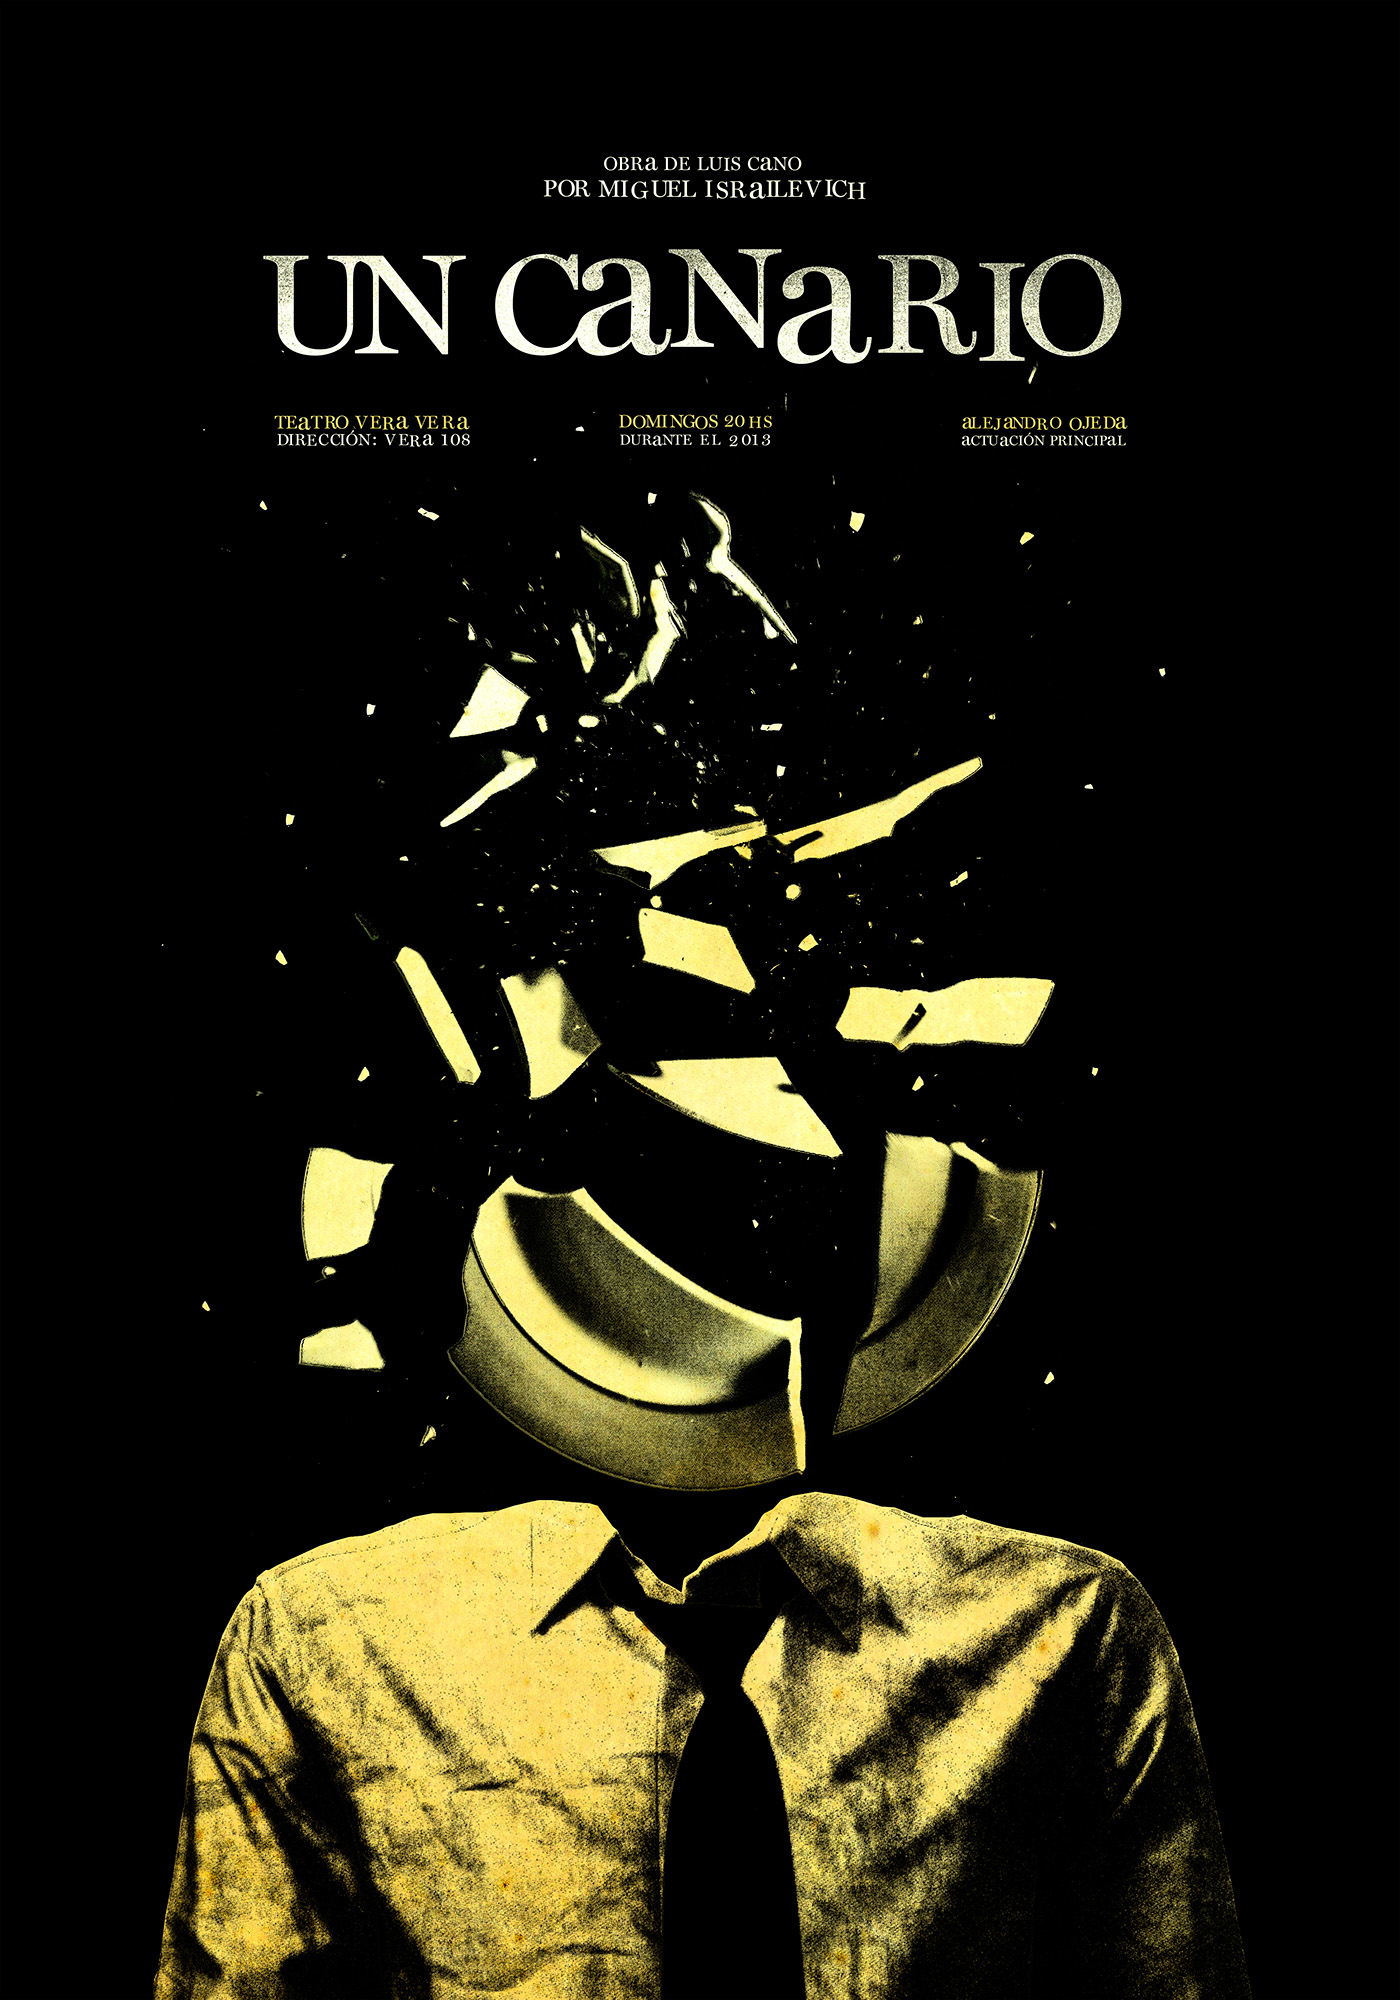 teatro  diseño 2  gabriele  retorica afiche poster Un canario gabriele2 Theatre